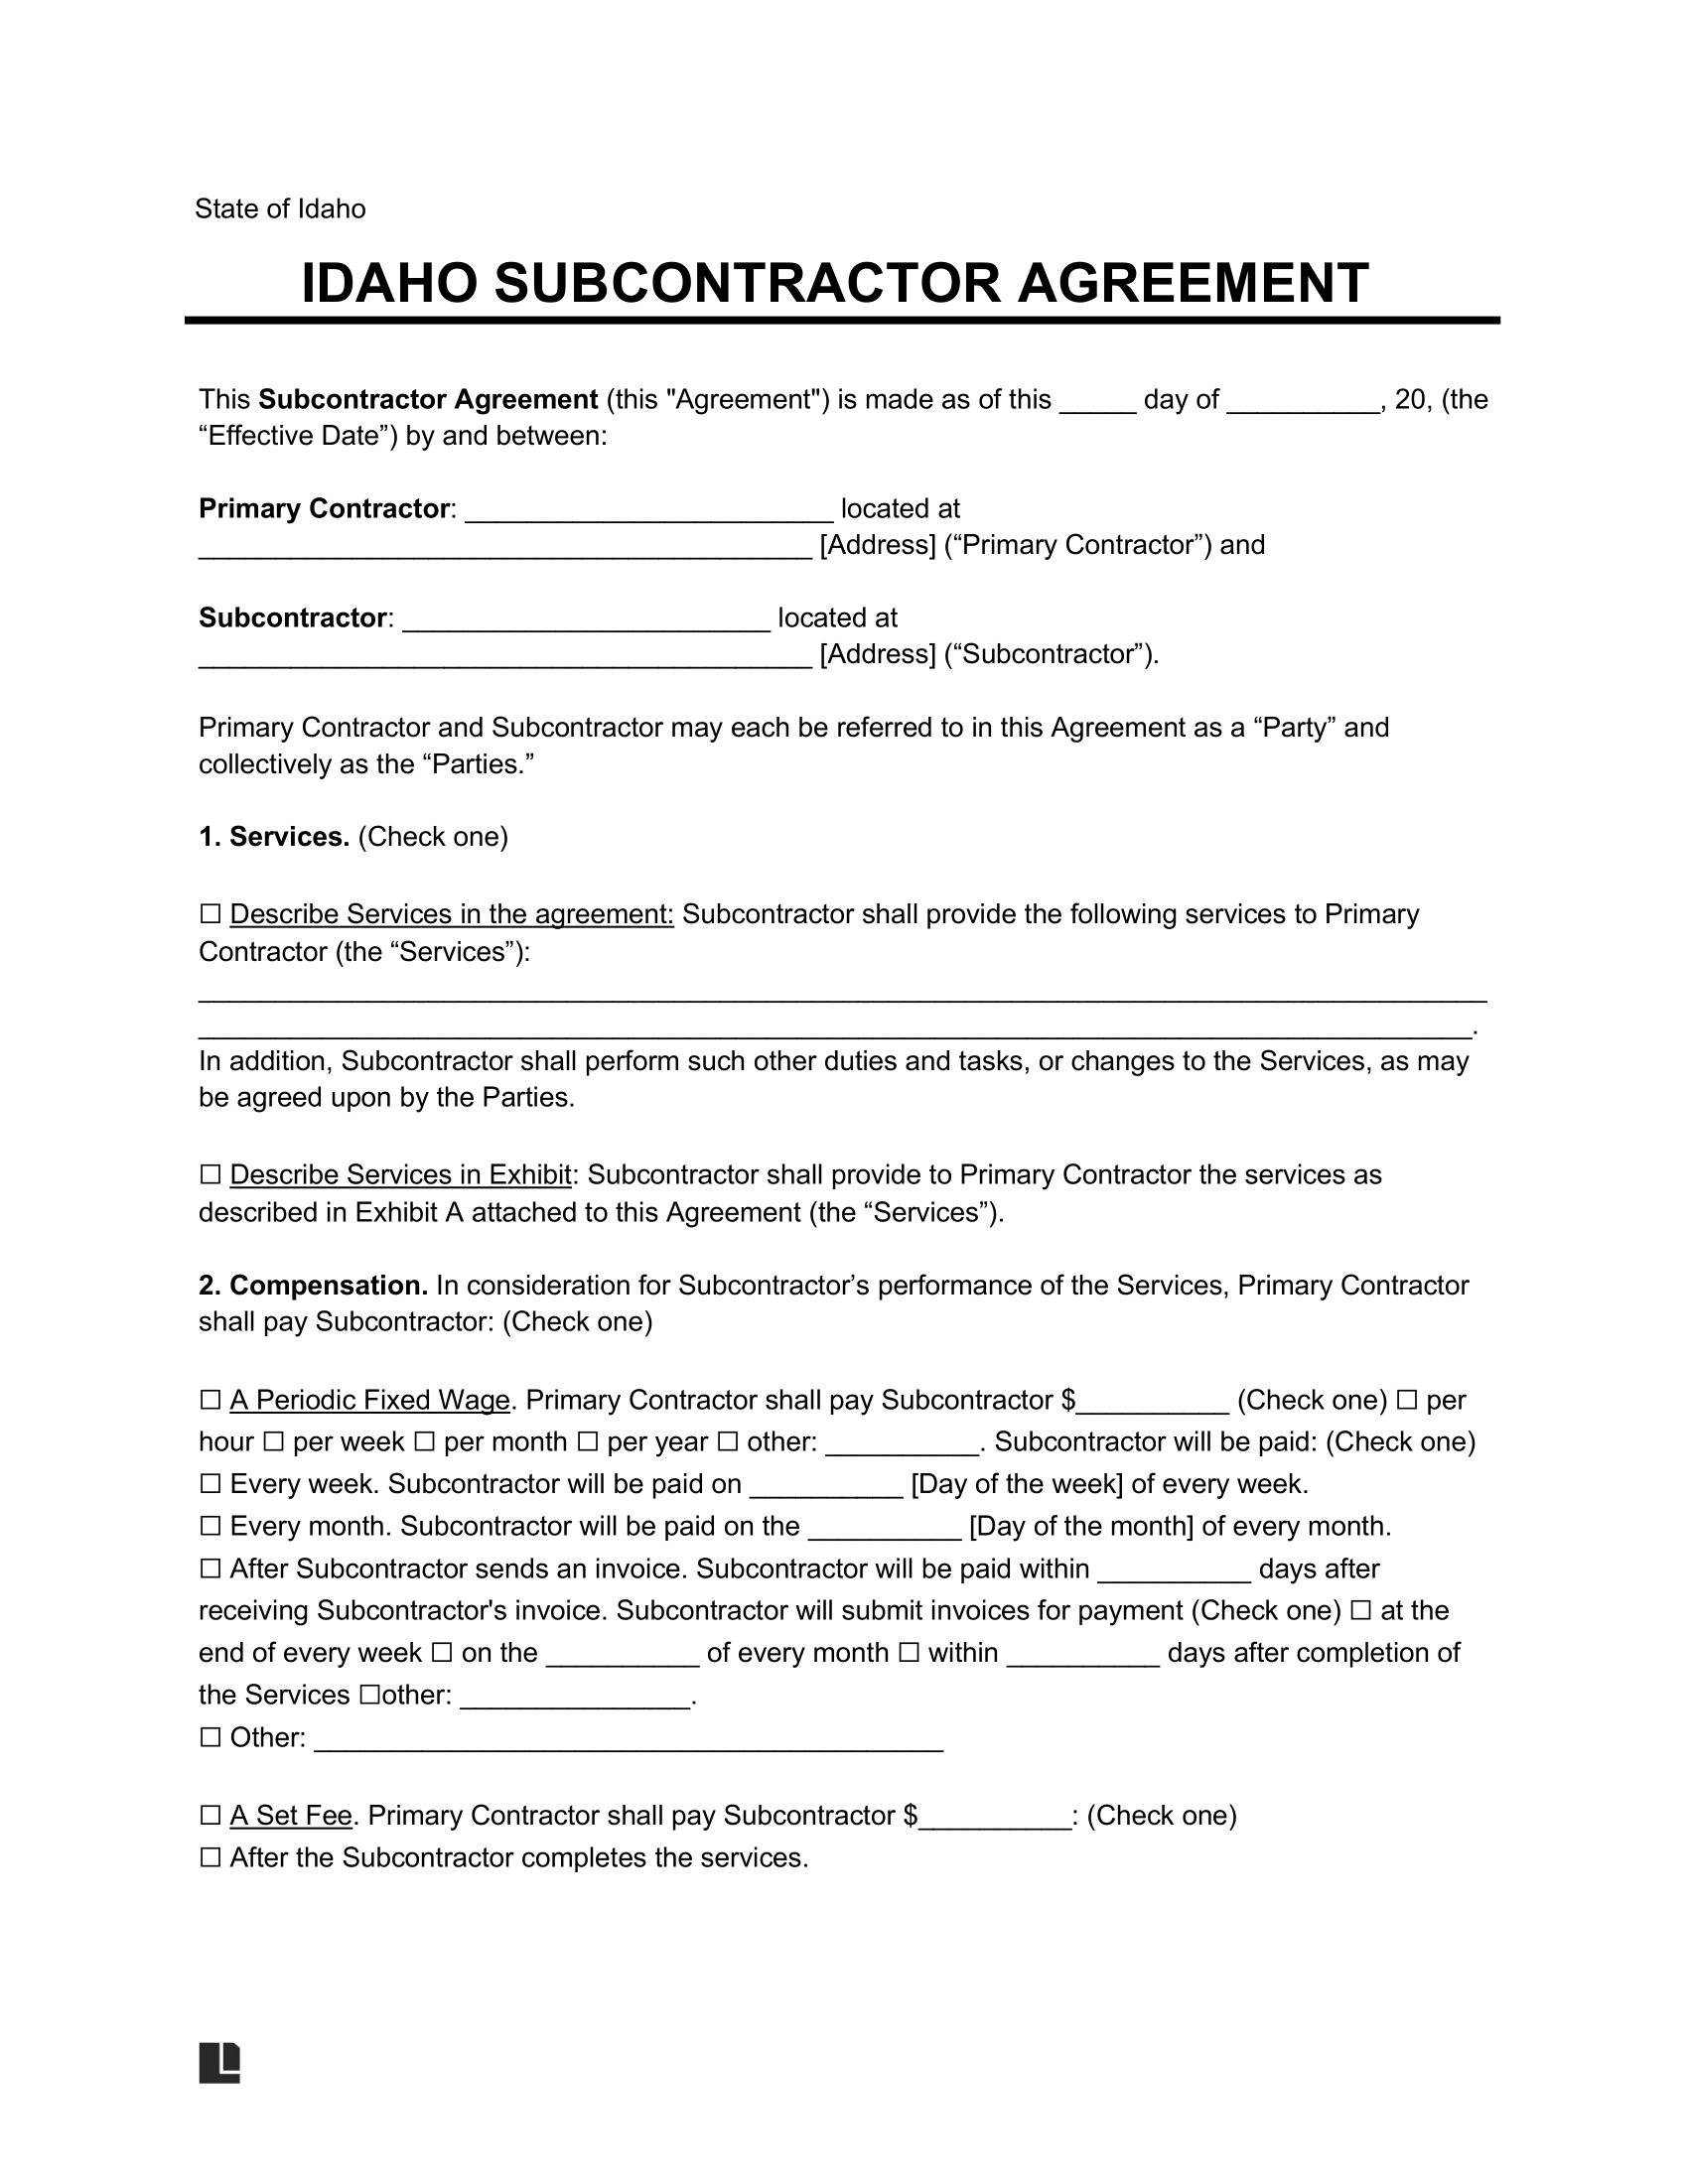 Idaho Subcontractor Agreement Sample